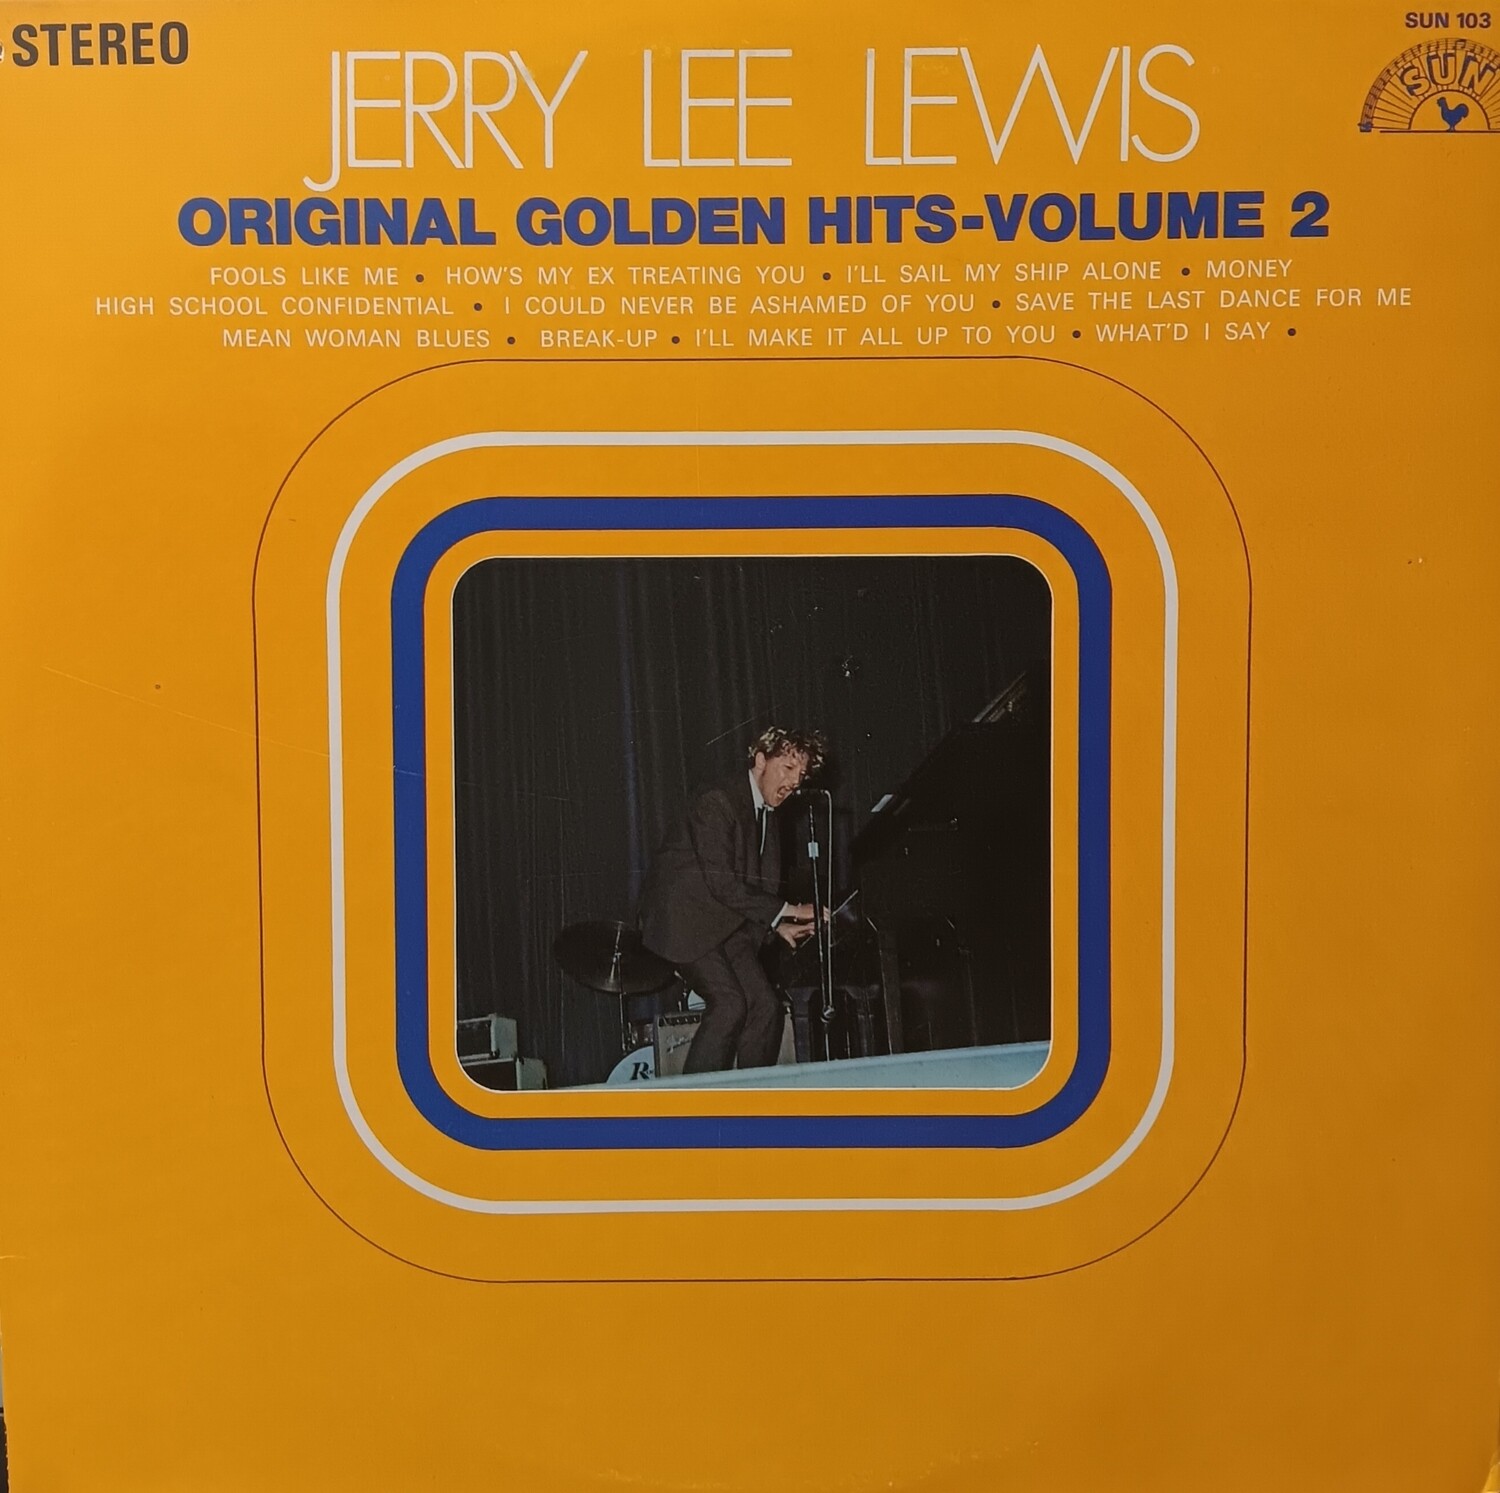 JERRY LEE LEWIS - Original Golden Hits Volume 2